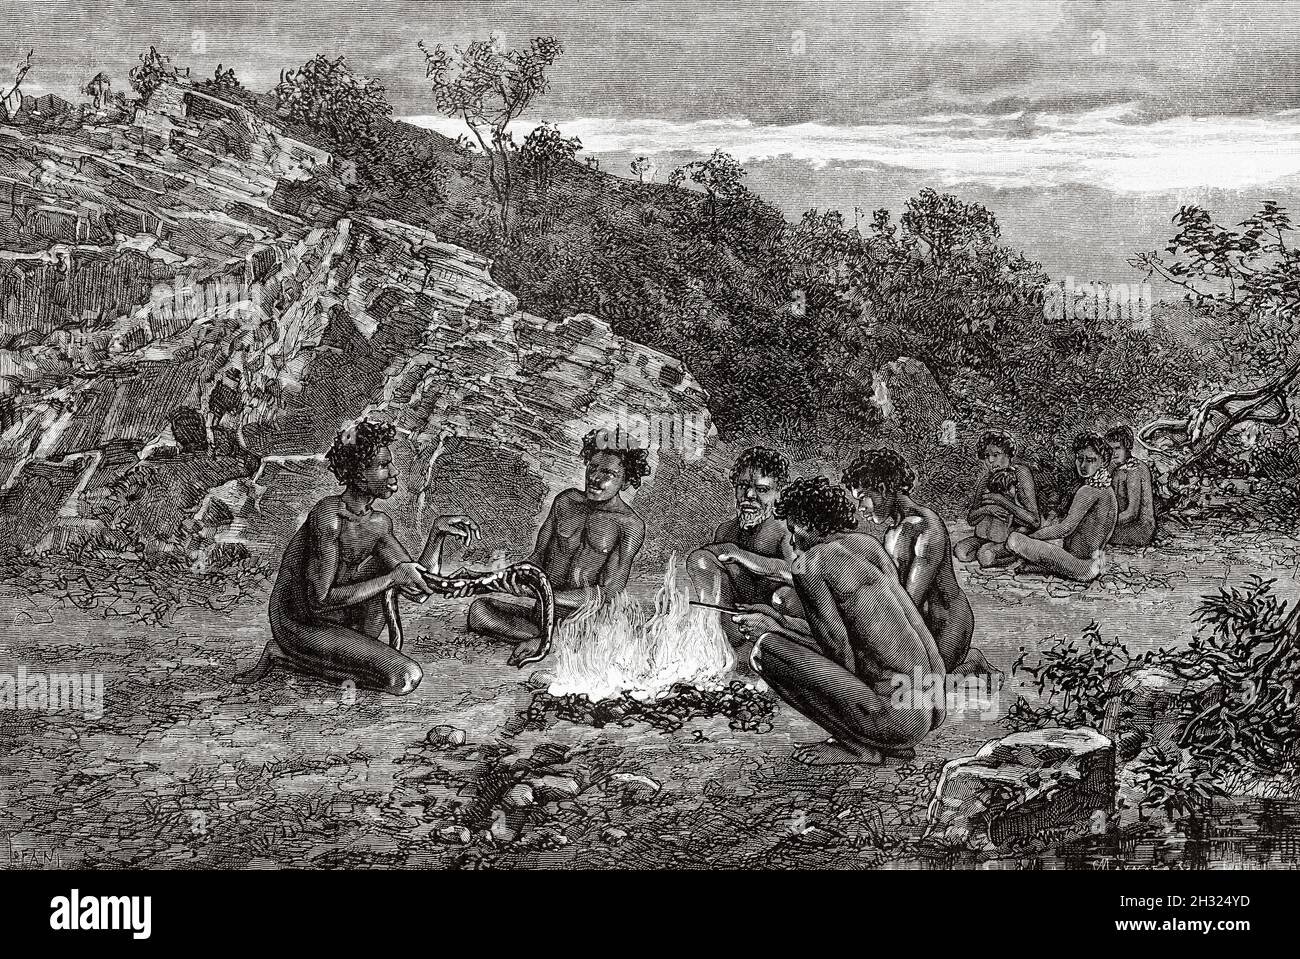 Australian aborigines preparing an eel on a bonfire. Queensland, Australia. Old 19th century engraved illustration, Journey to Northeast Australia by Carl Lumholtz 1880-1884 from Le Tour du Monde 1889 Stock Photo